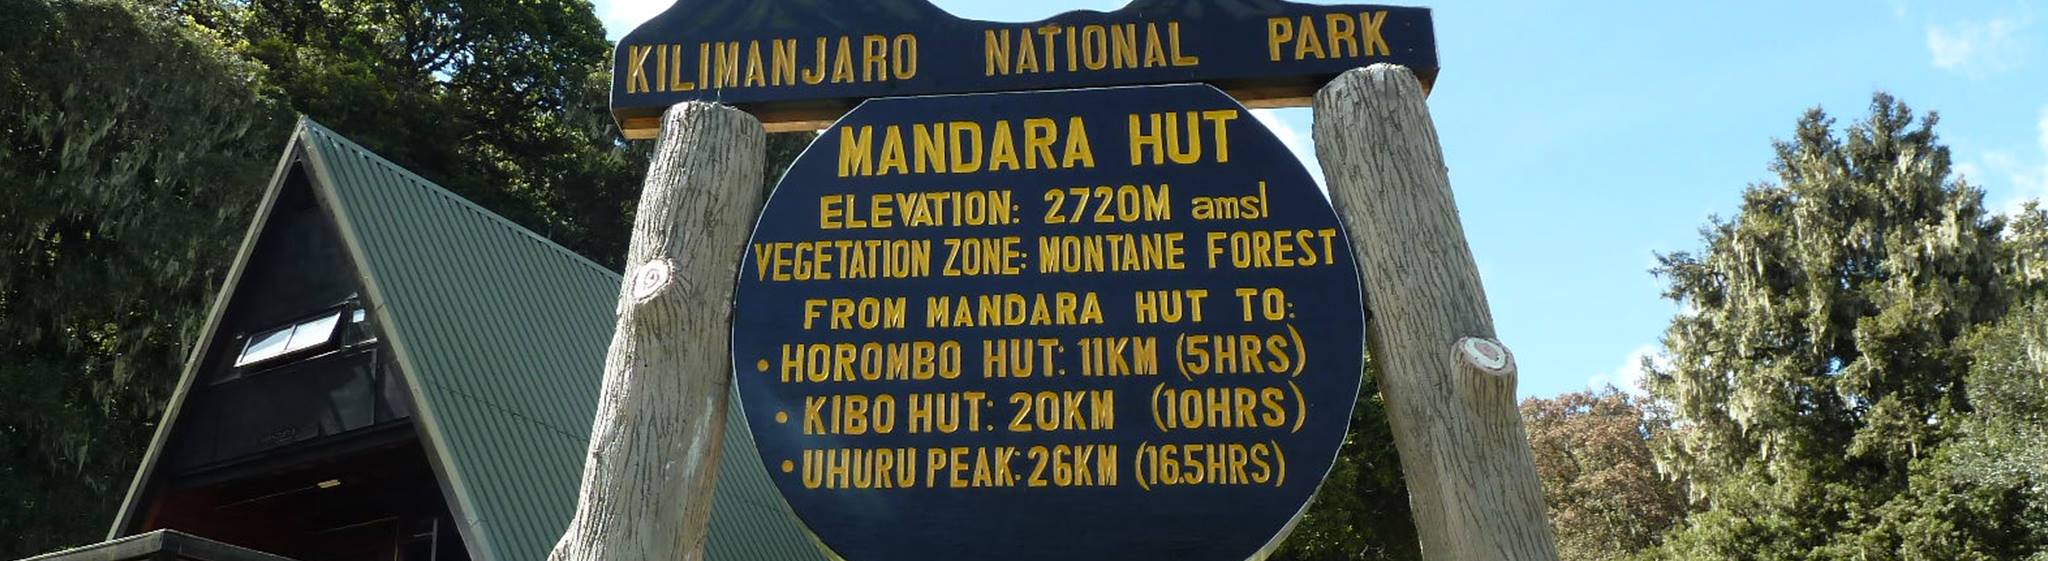 Kilimanjaro + Zanzibar via Marangu Route - Safanta Tours & Travel Company Limited